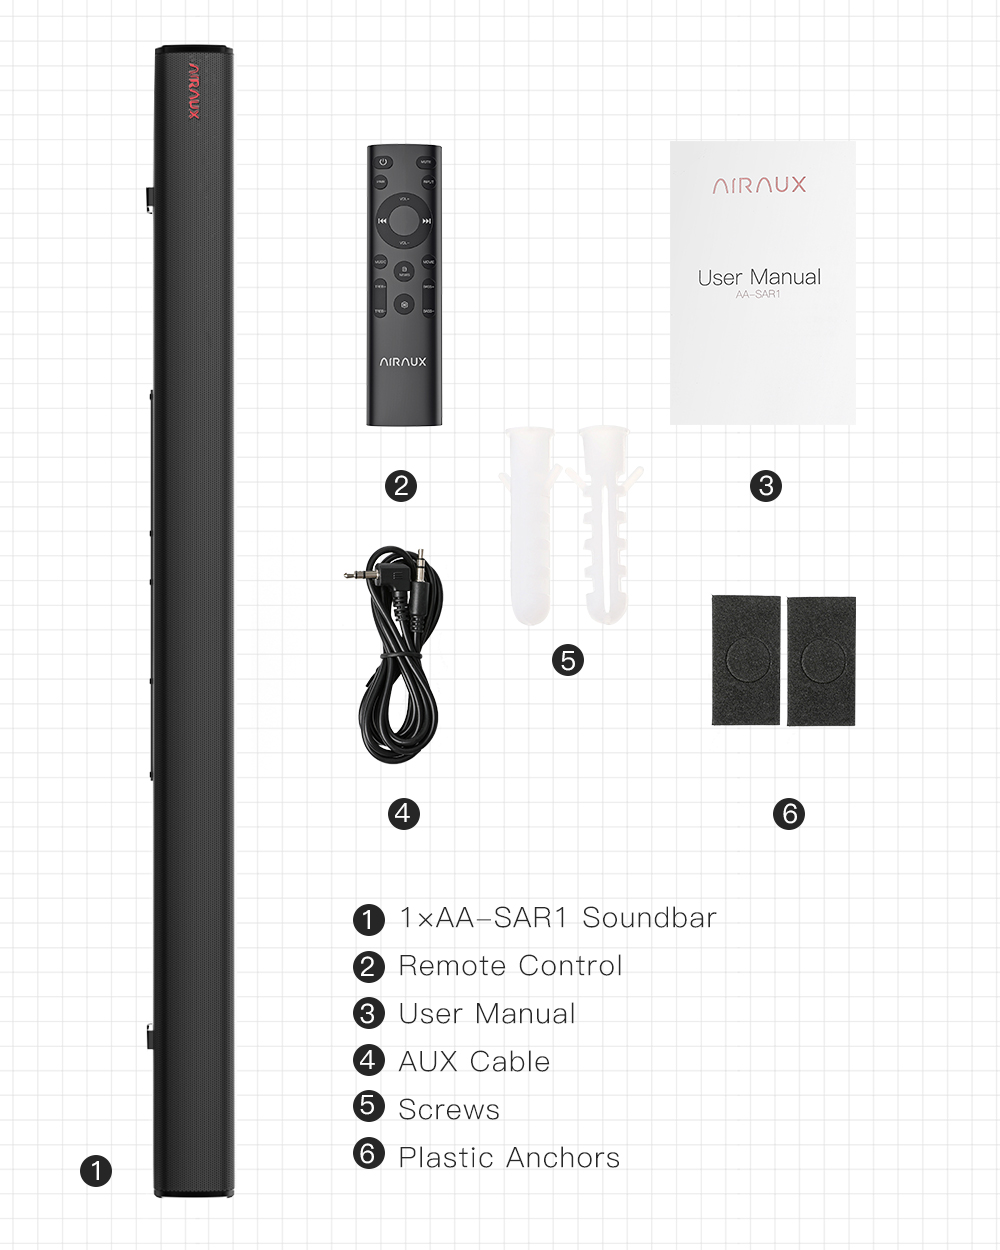 BlitzWolf® AirAux AA-SAR1 60W Bluetooth V5.0 Soundbar בר טלוויזיה טלוויזיה בס חזק DSP סטריאו HDMI אופטי AUX רמקול קולנוע ביתי